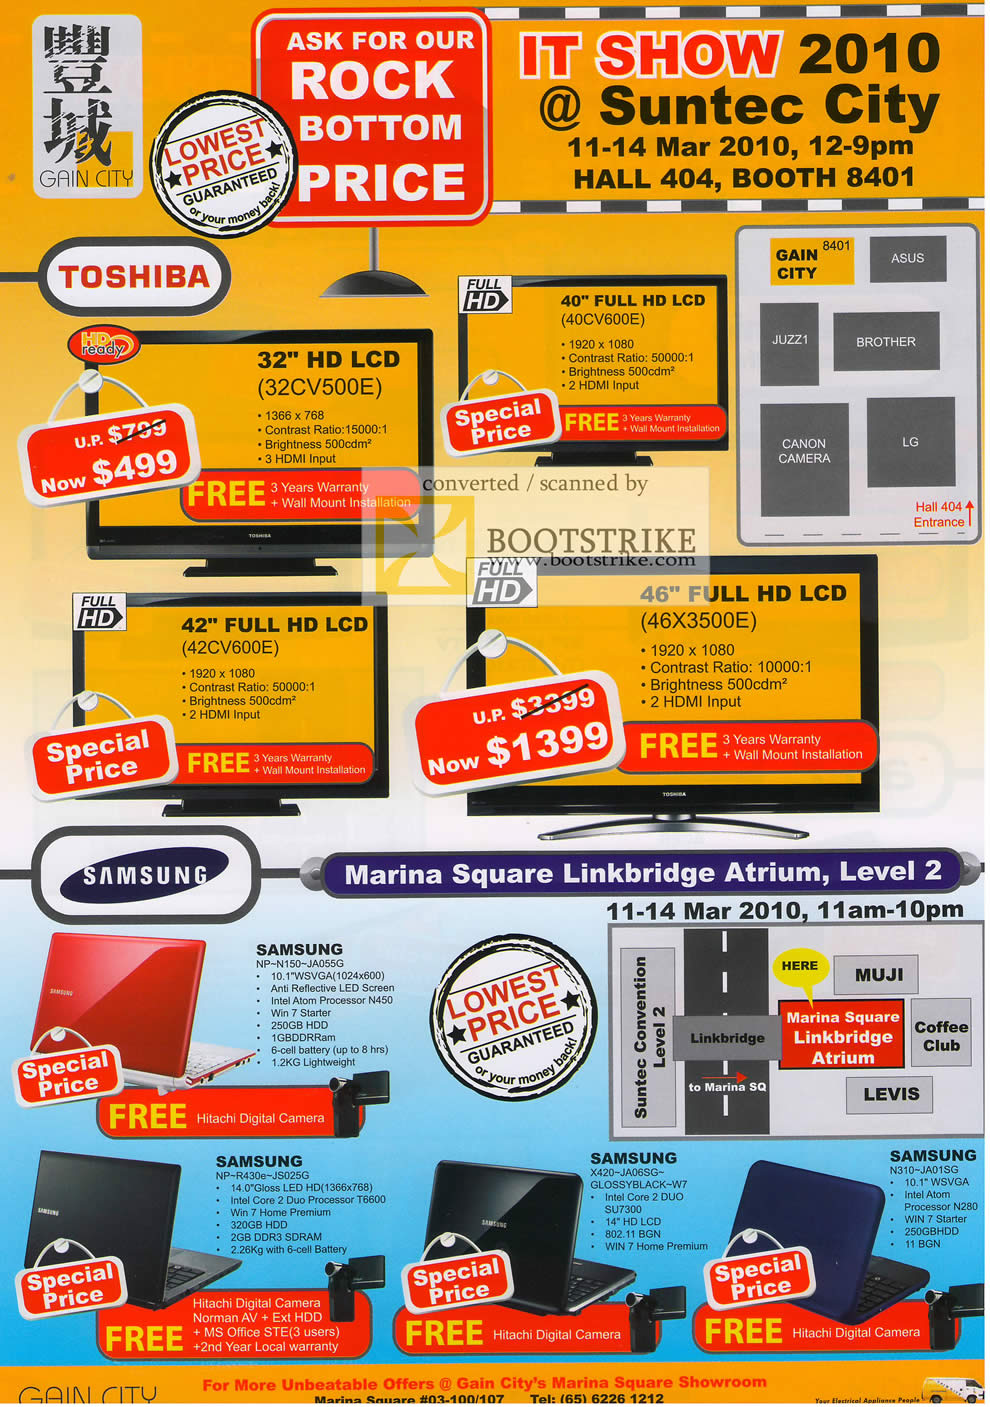 IT Show 2010 price list image brochure of Gain City LCD TV Toshiba Samsung Notebooks NP N150 JA055G R430e JS025G X420 JA06SG N310 JA01SG